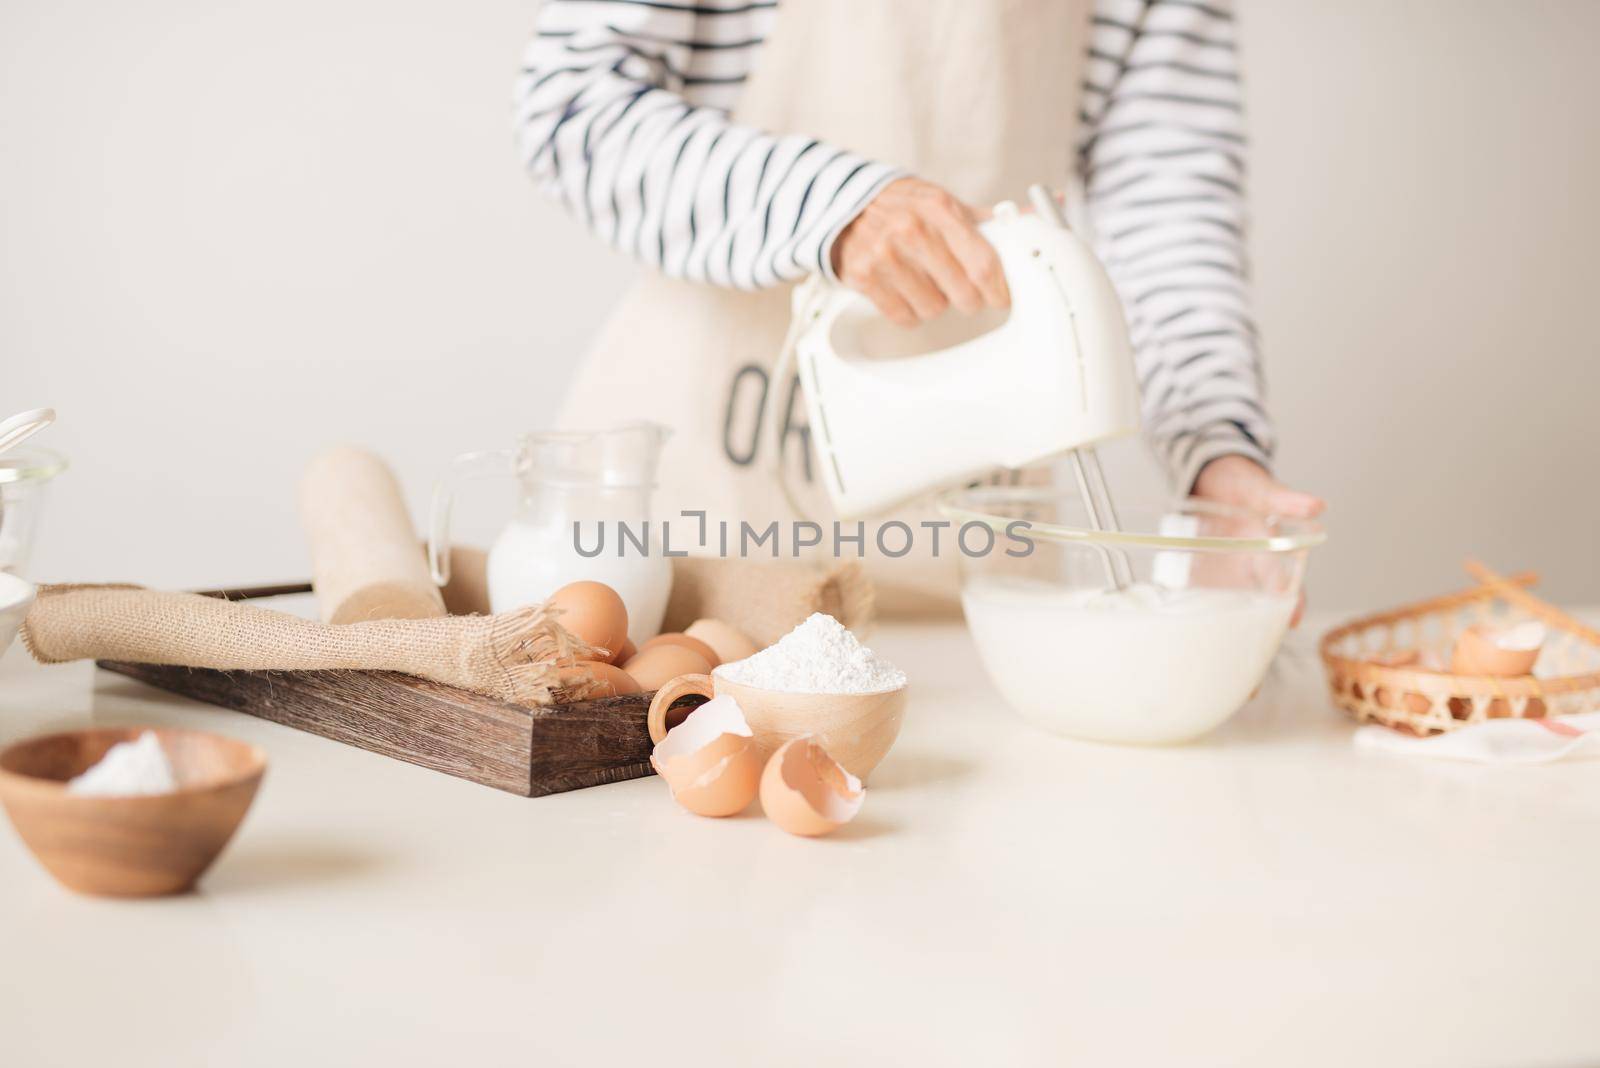 Mixing white egg cream in bowl with motor mixer, baking cake 